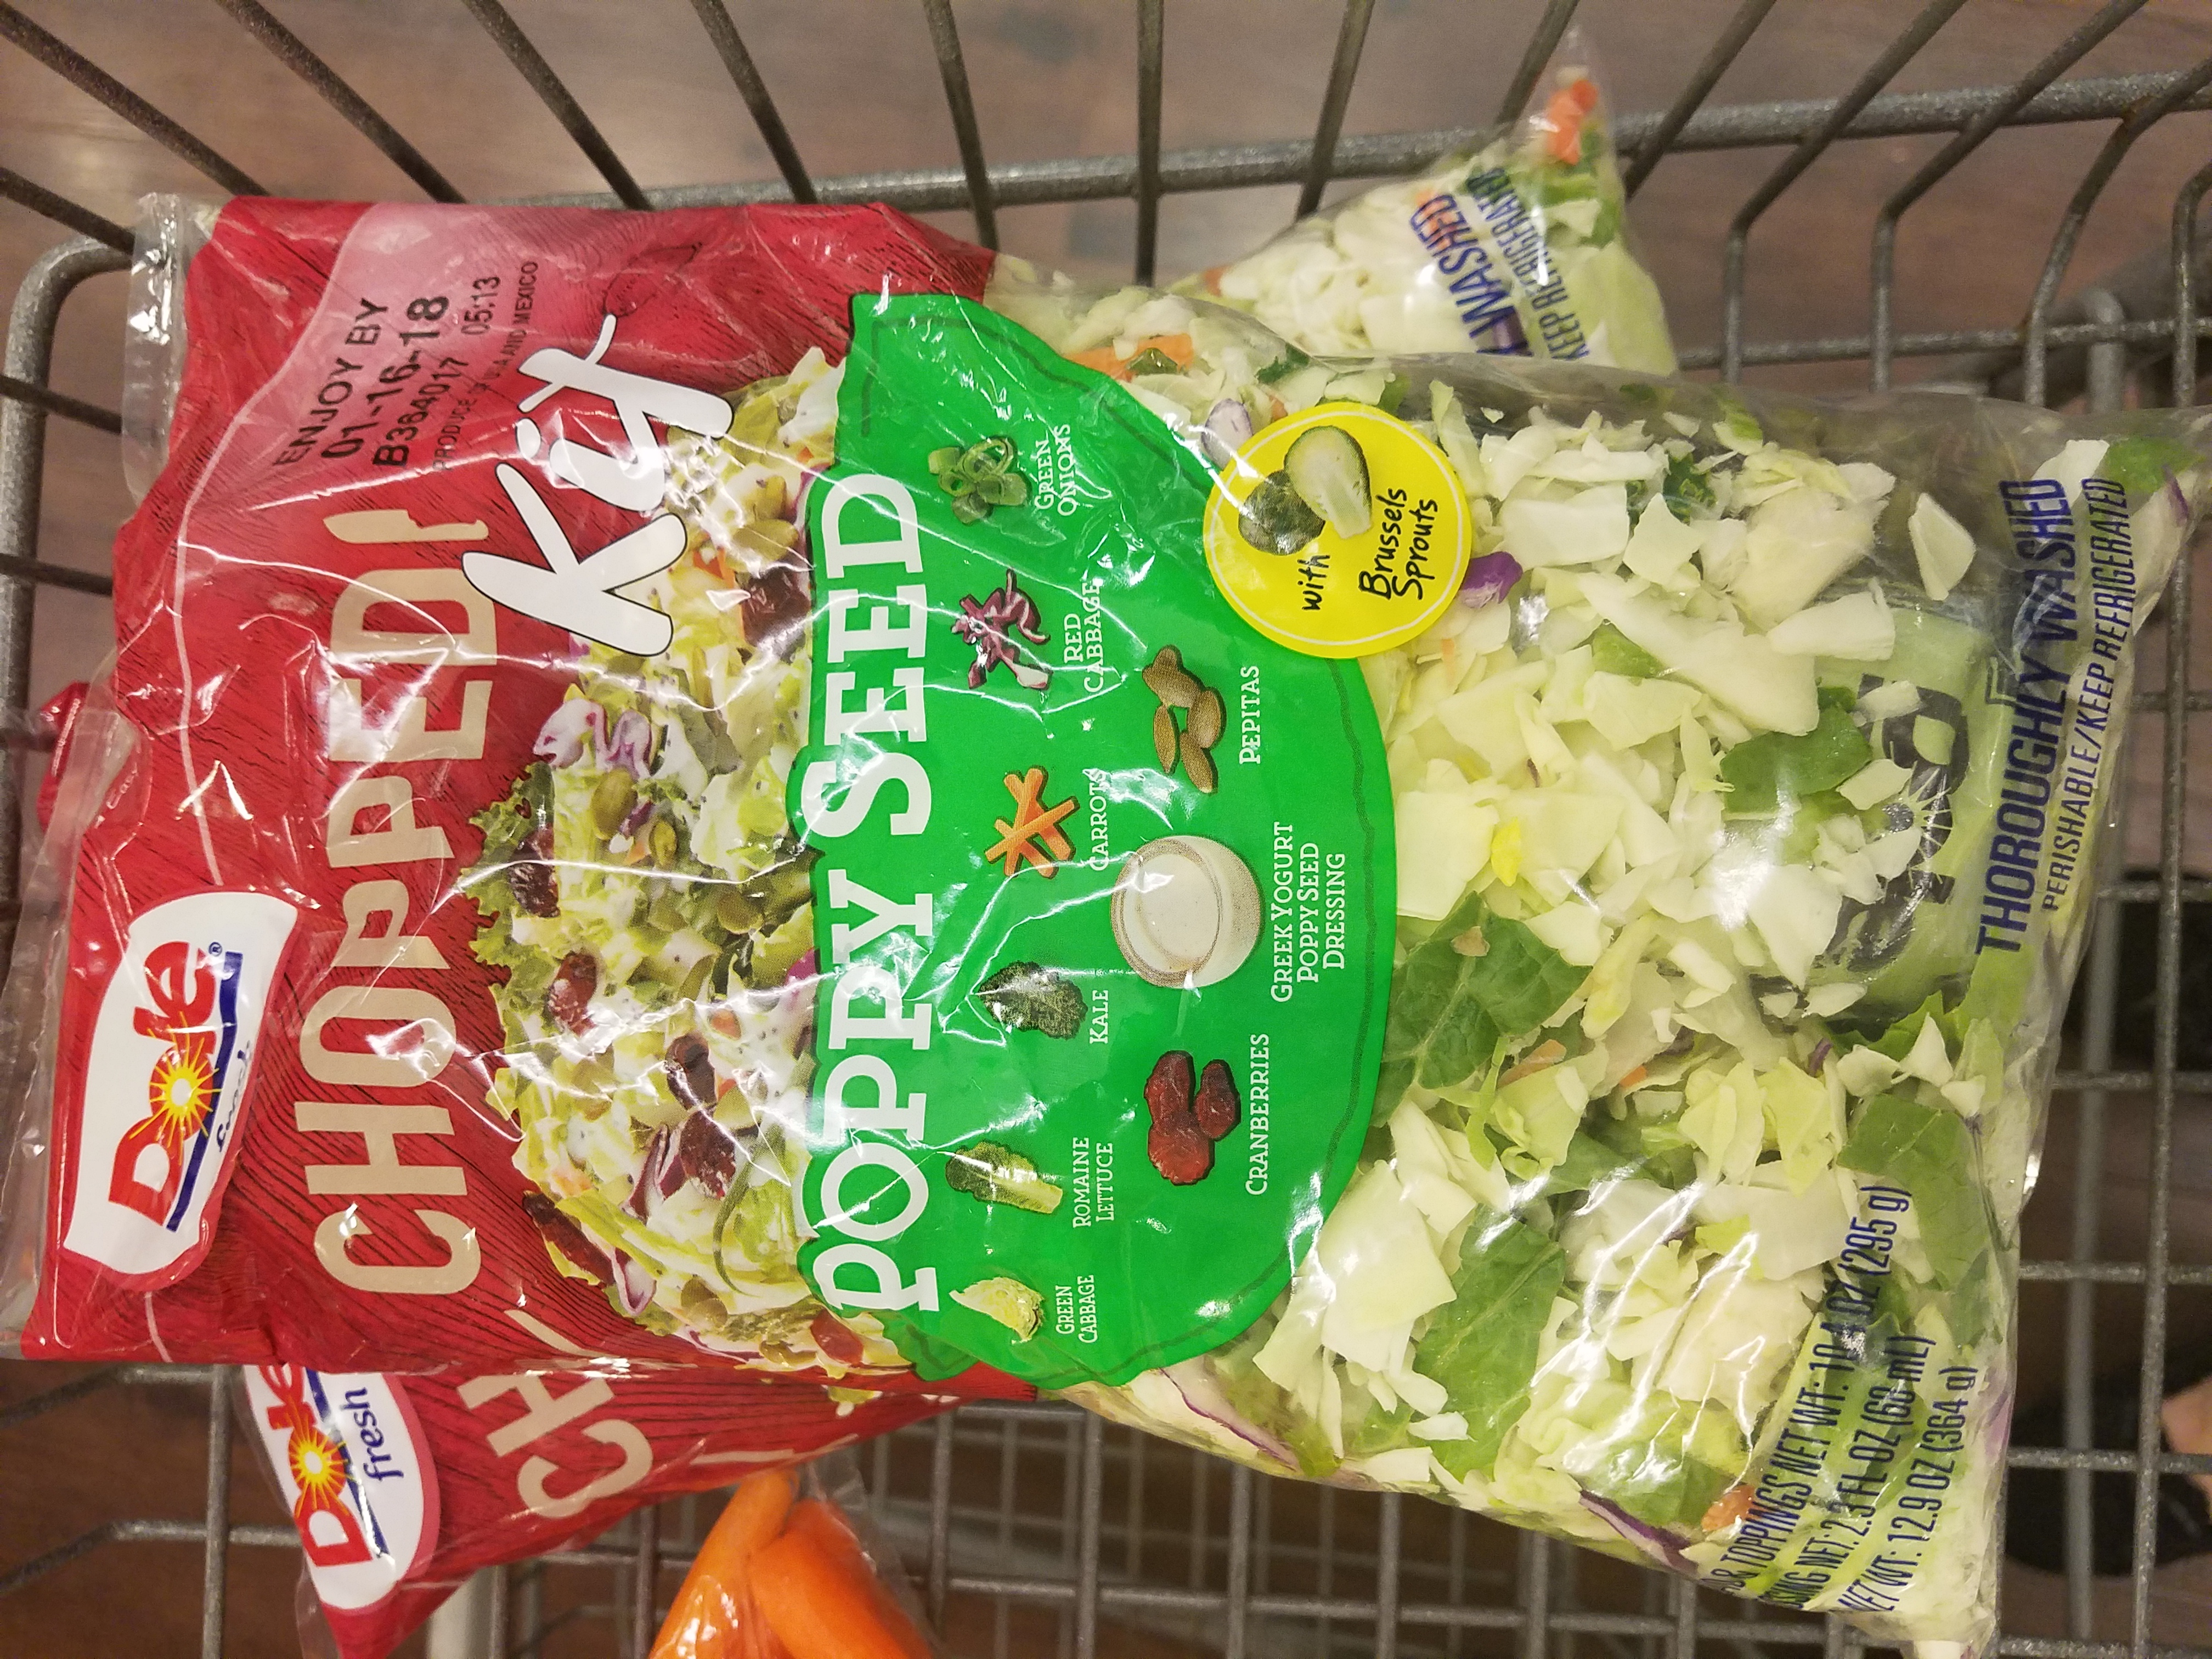 dole chopped salad kit